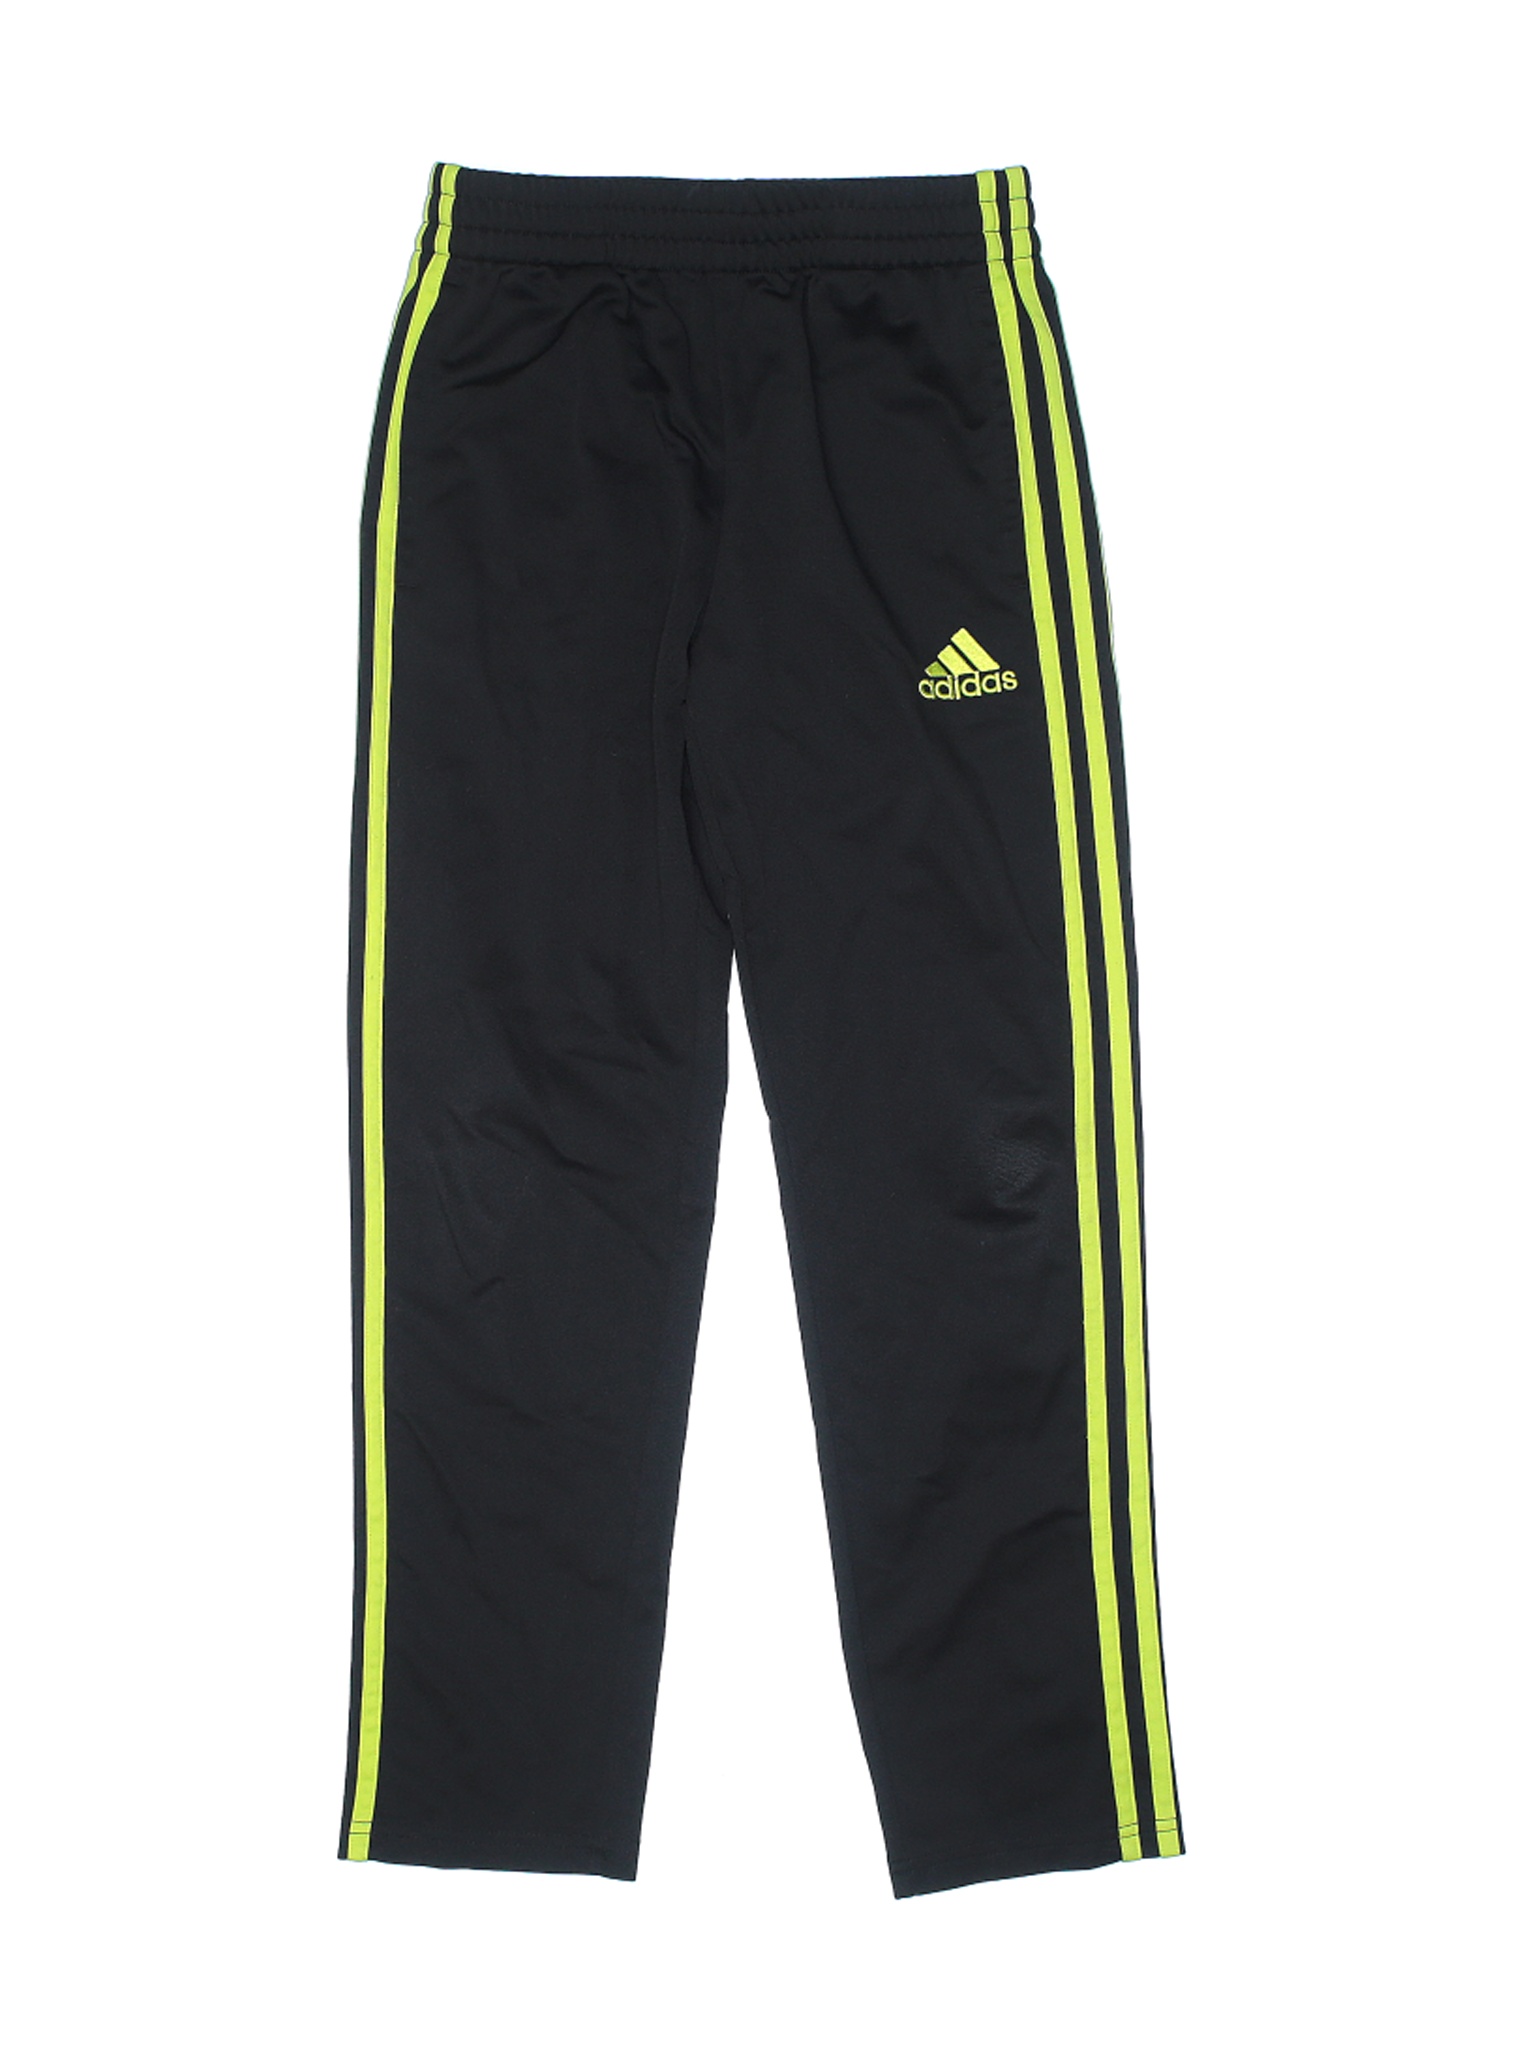 Adidas Girls Black Track Pants 10 | eBay